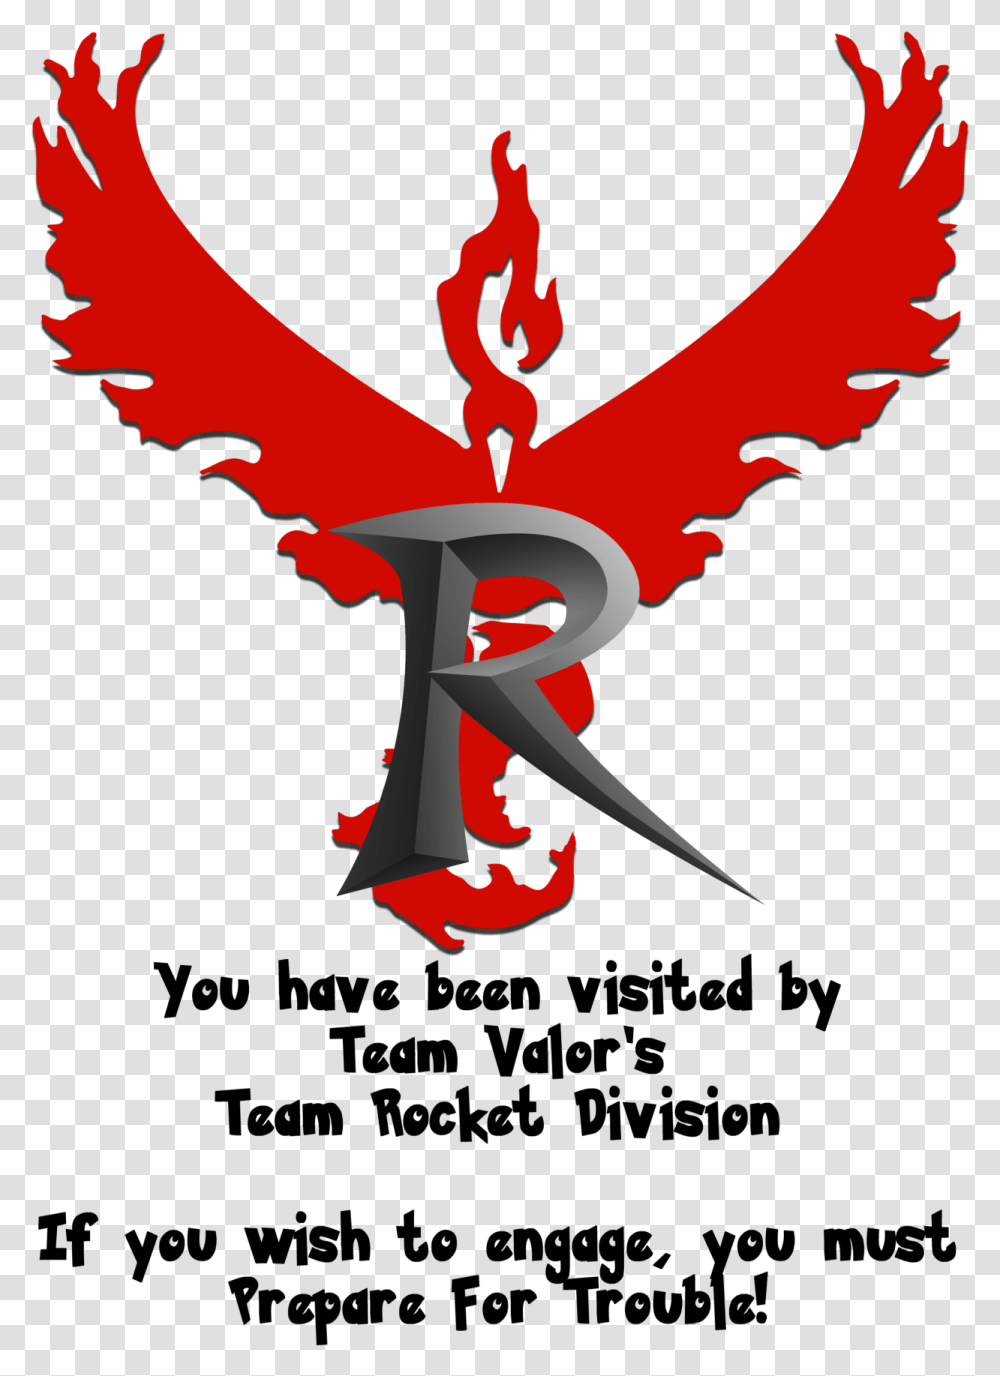 Team Rocket Division Pokemon Red Team Name, Dragon, Poster, Advertisement Transparent Png